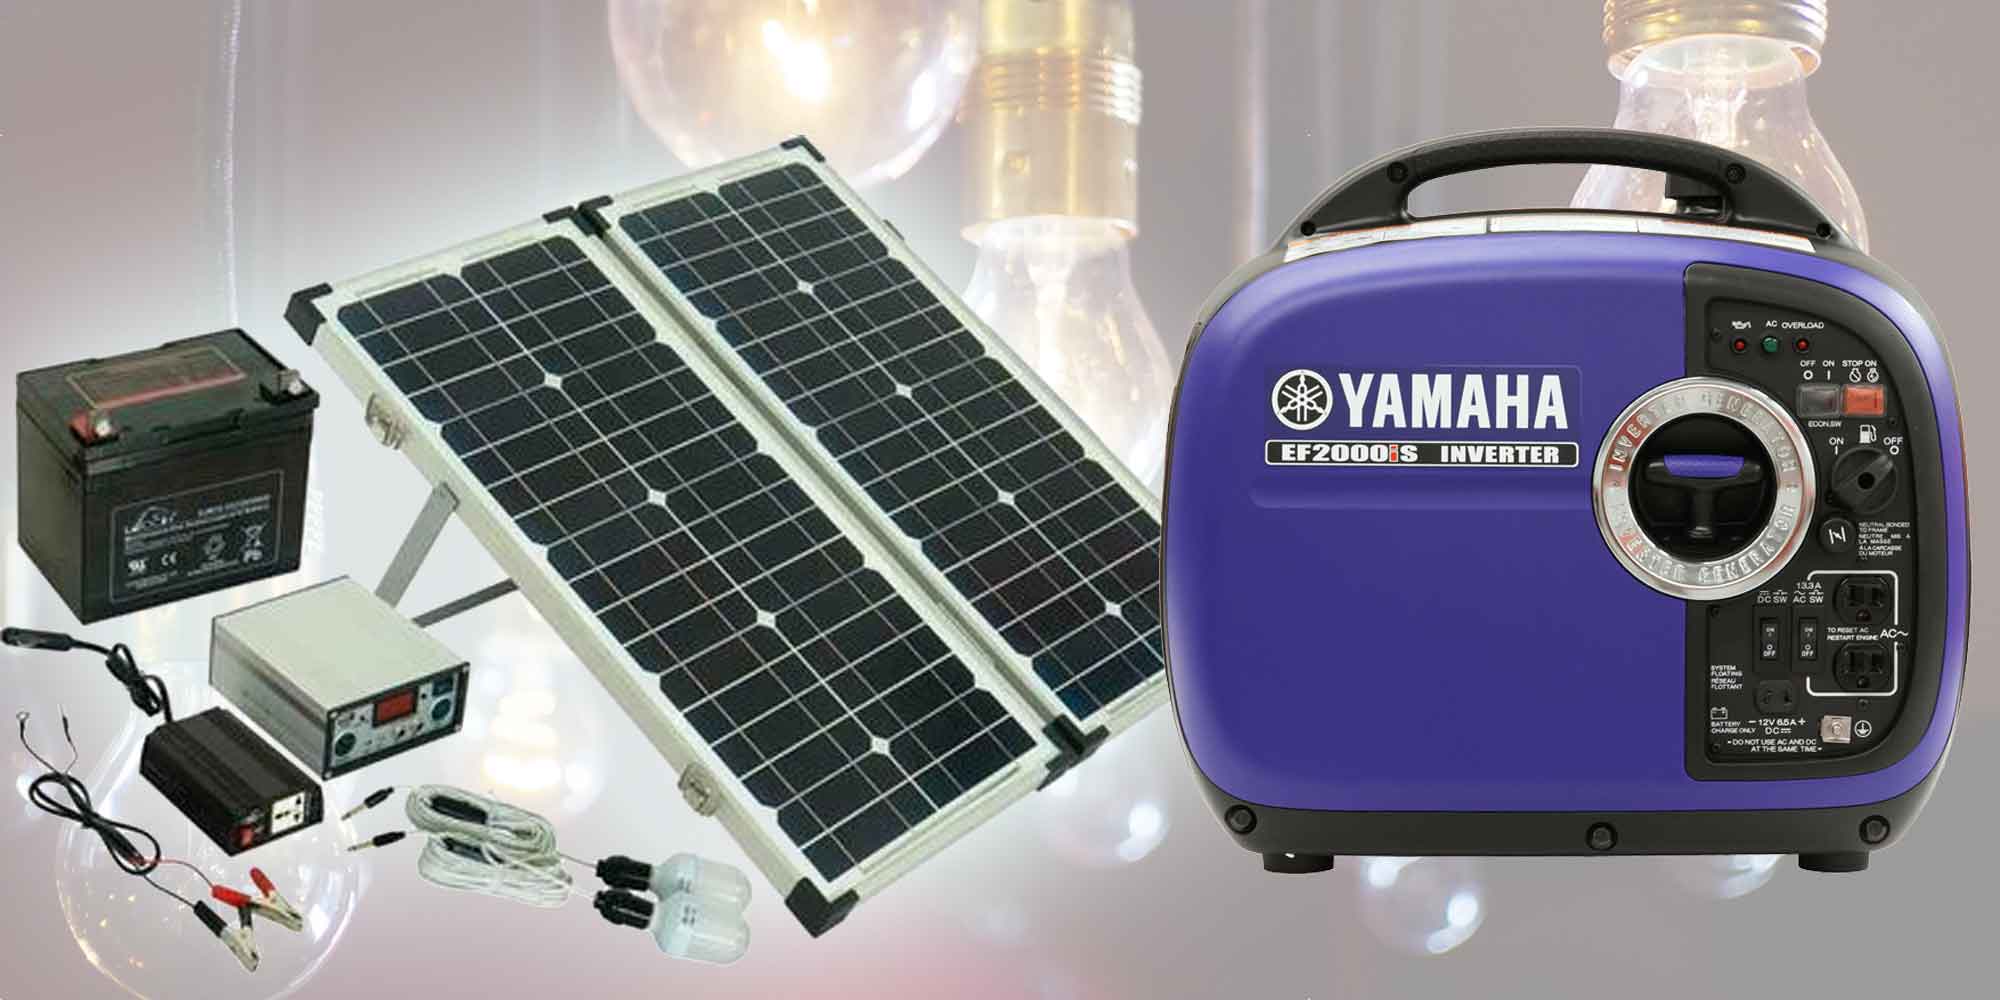 Inverter Vs Solar What's The Best Type Of Quiet Generator?